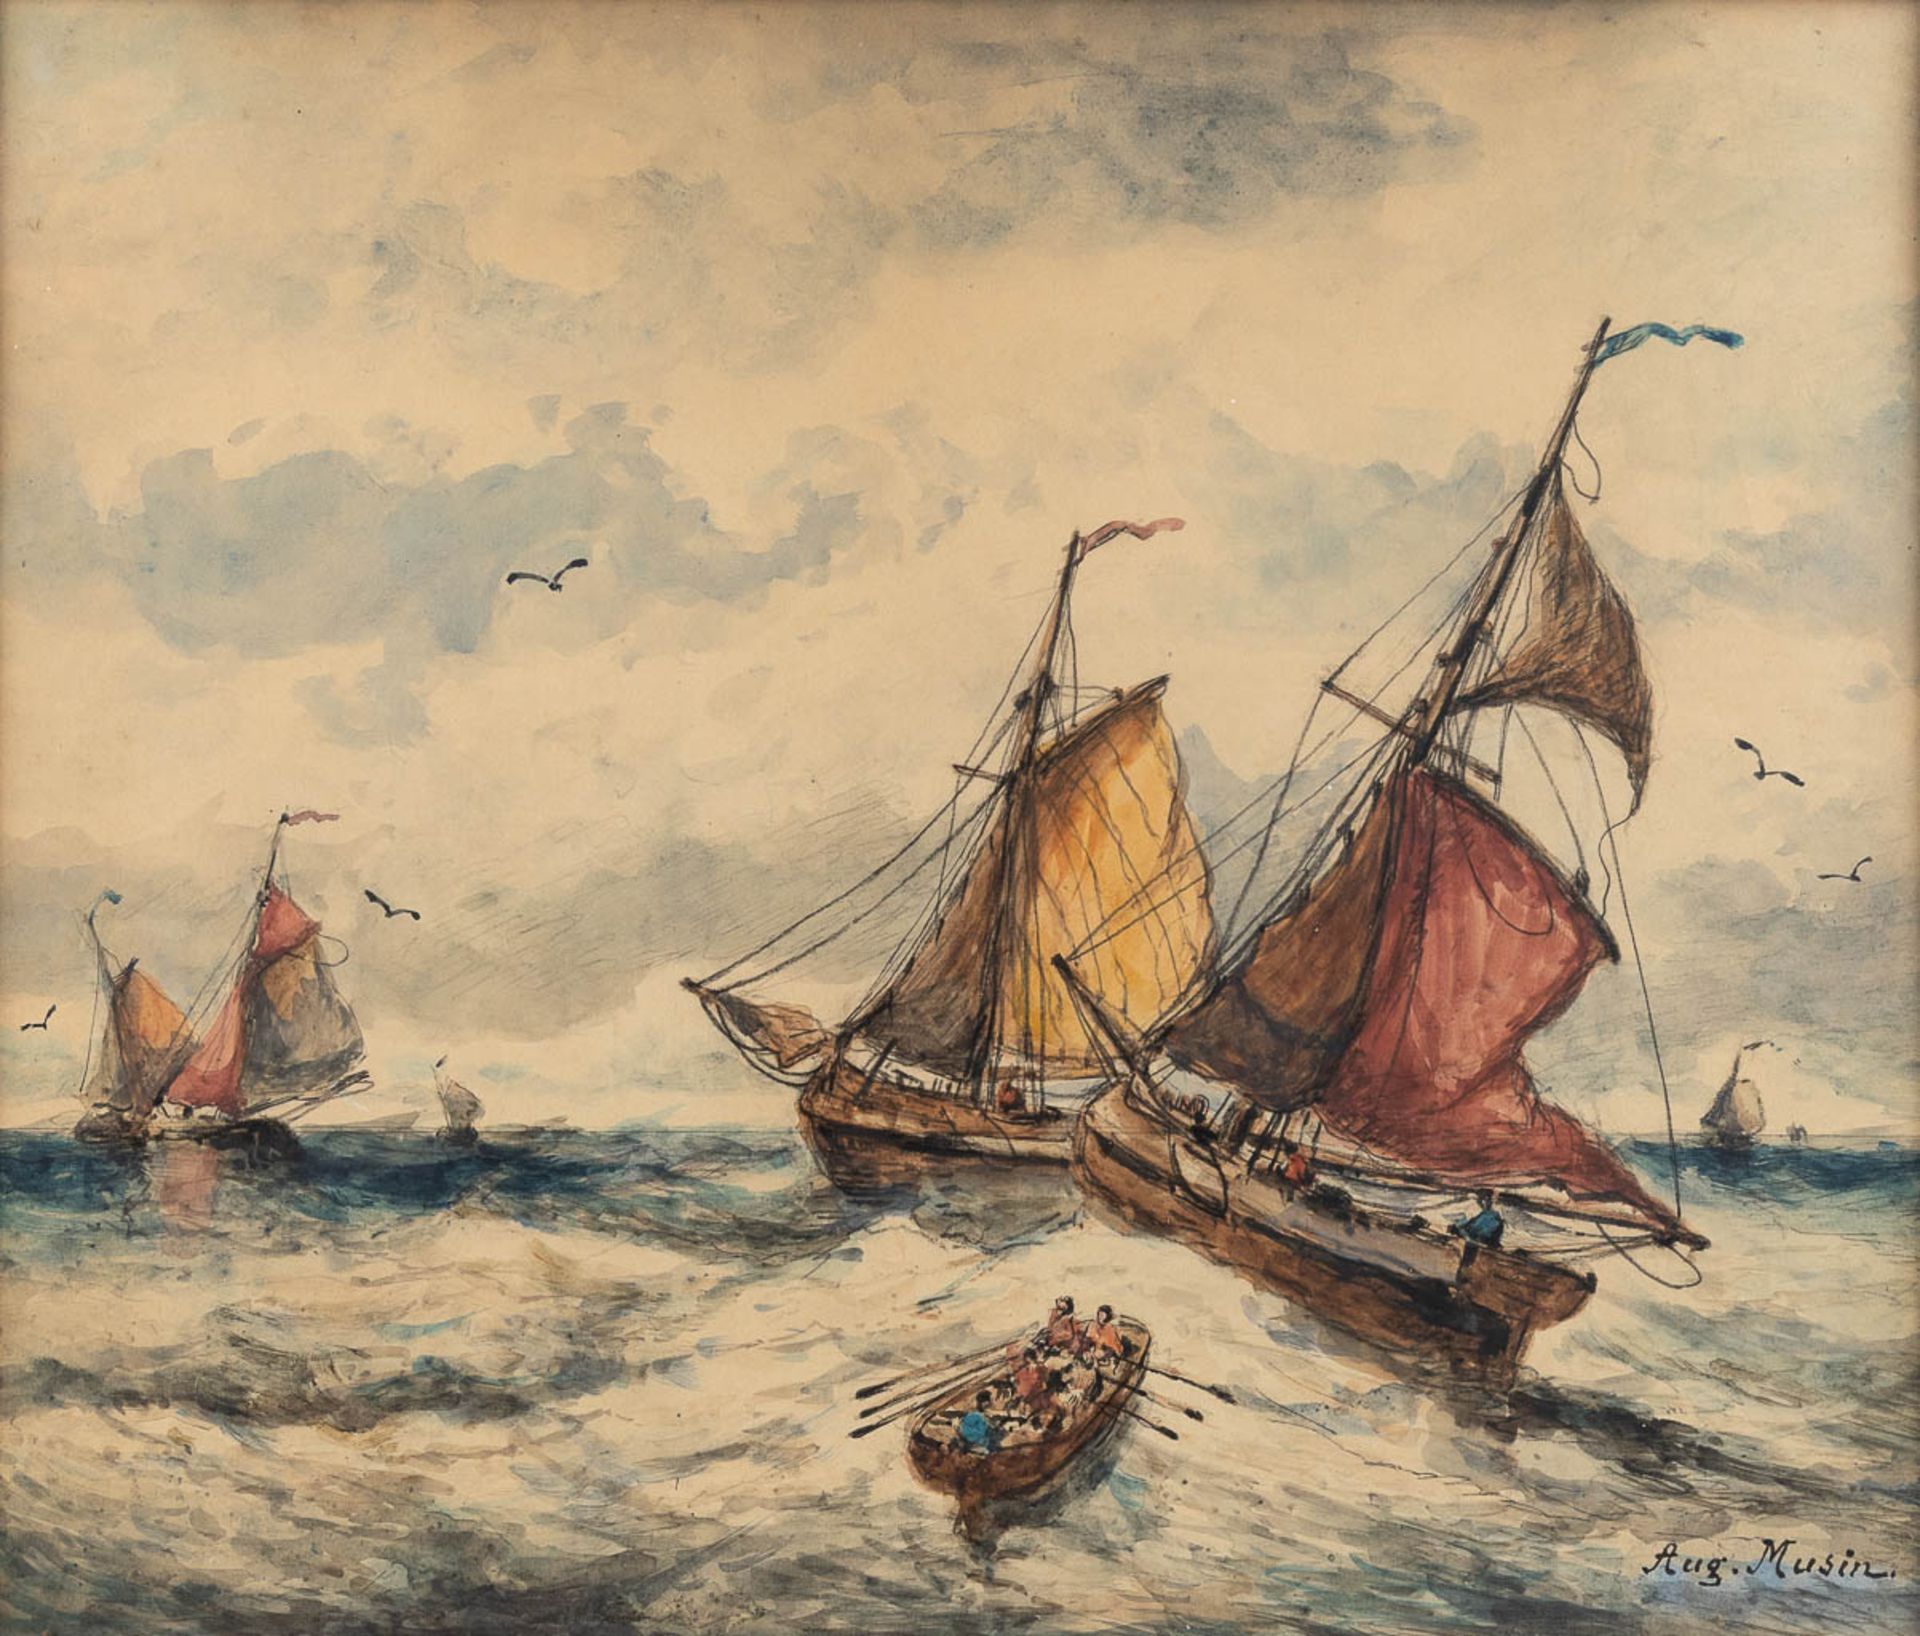 Auguste Henri MUSIN (1852-1923) 'Marine' watercolour on paper. (W: 47 x H: 39 cm)